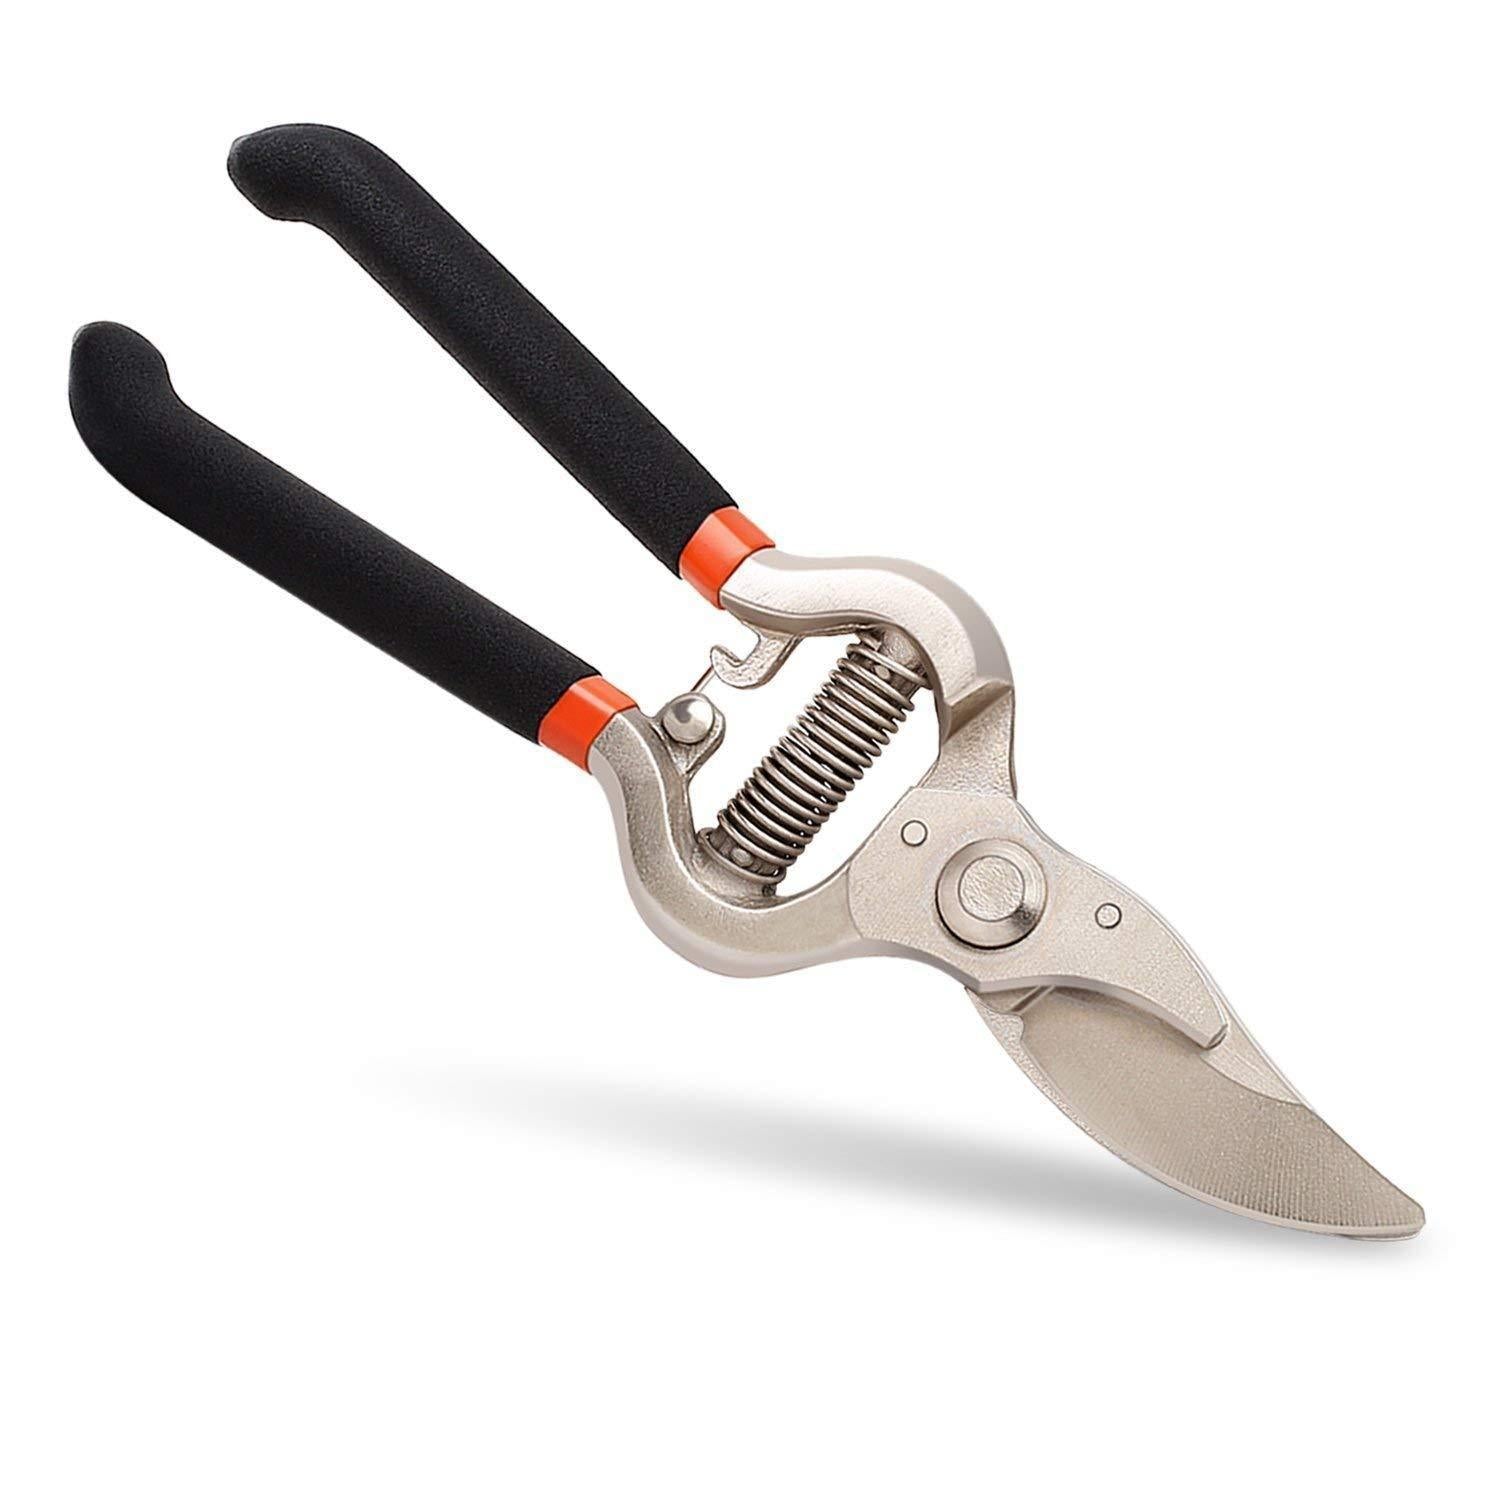 0466 Garden Shears Pruners Scissor (8 inch) - SkyShopy